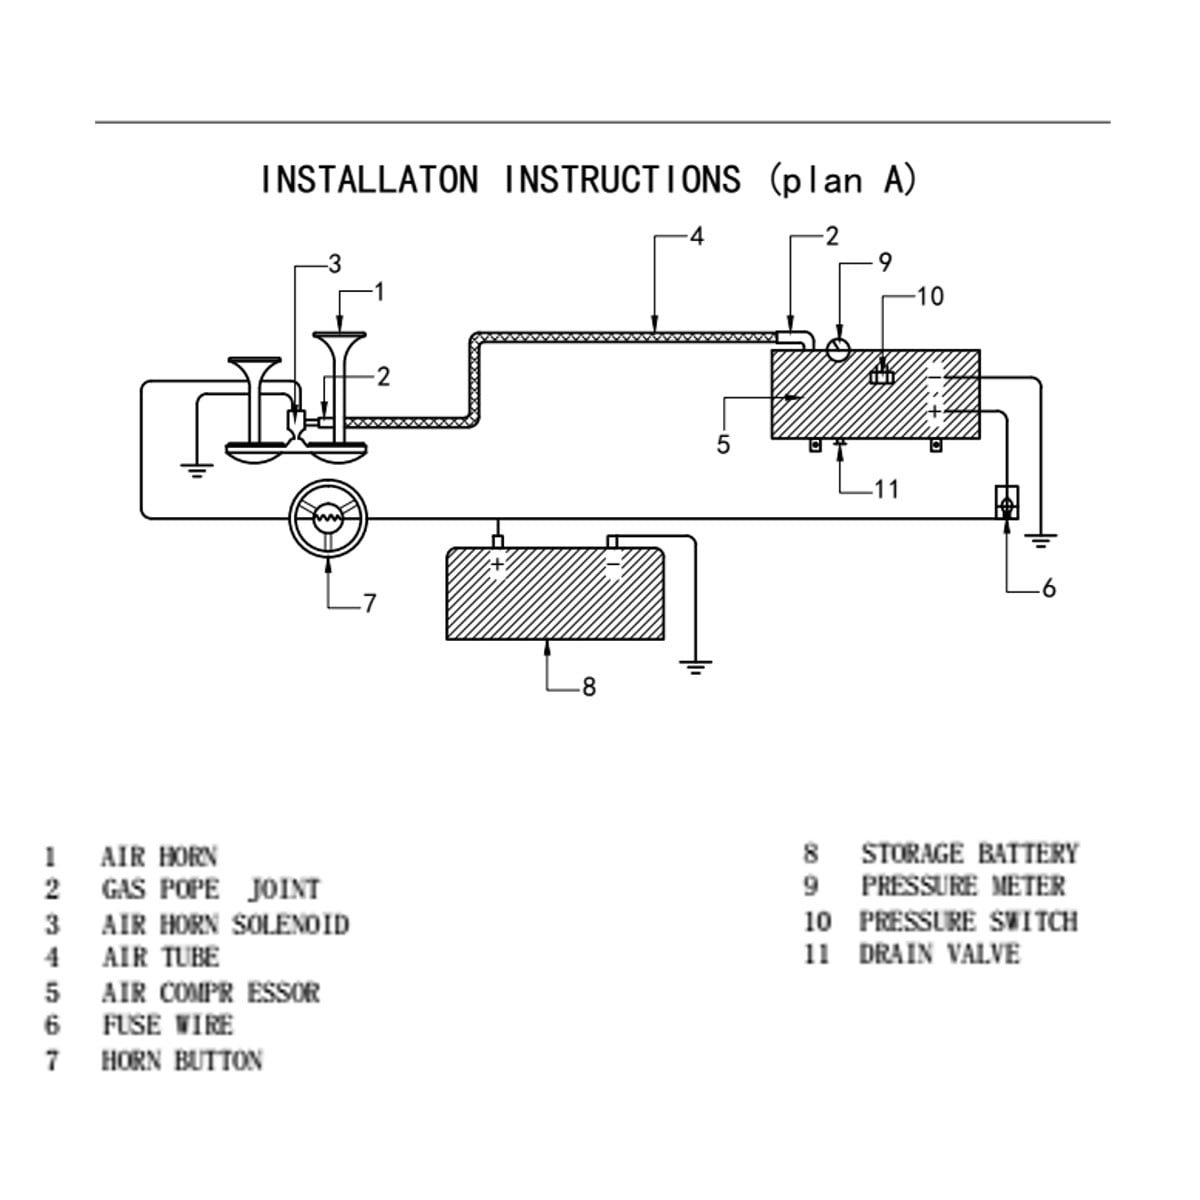 12v horn wiring diagram